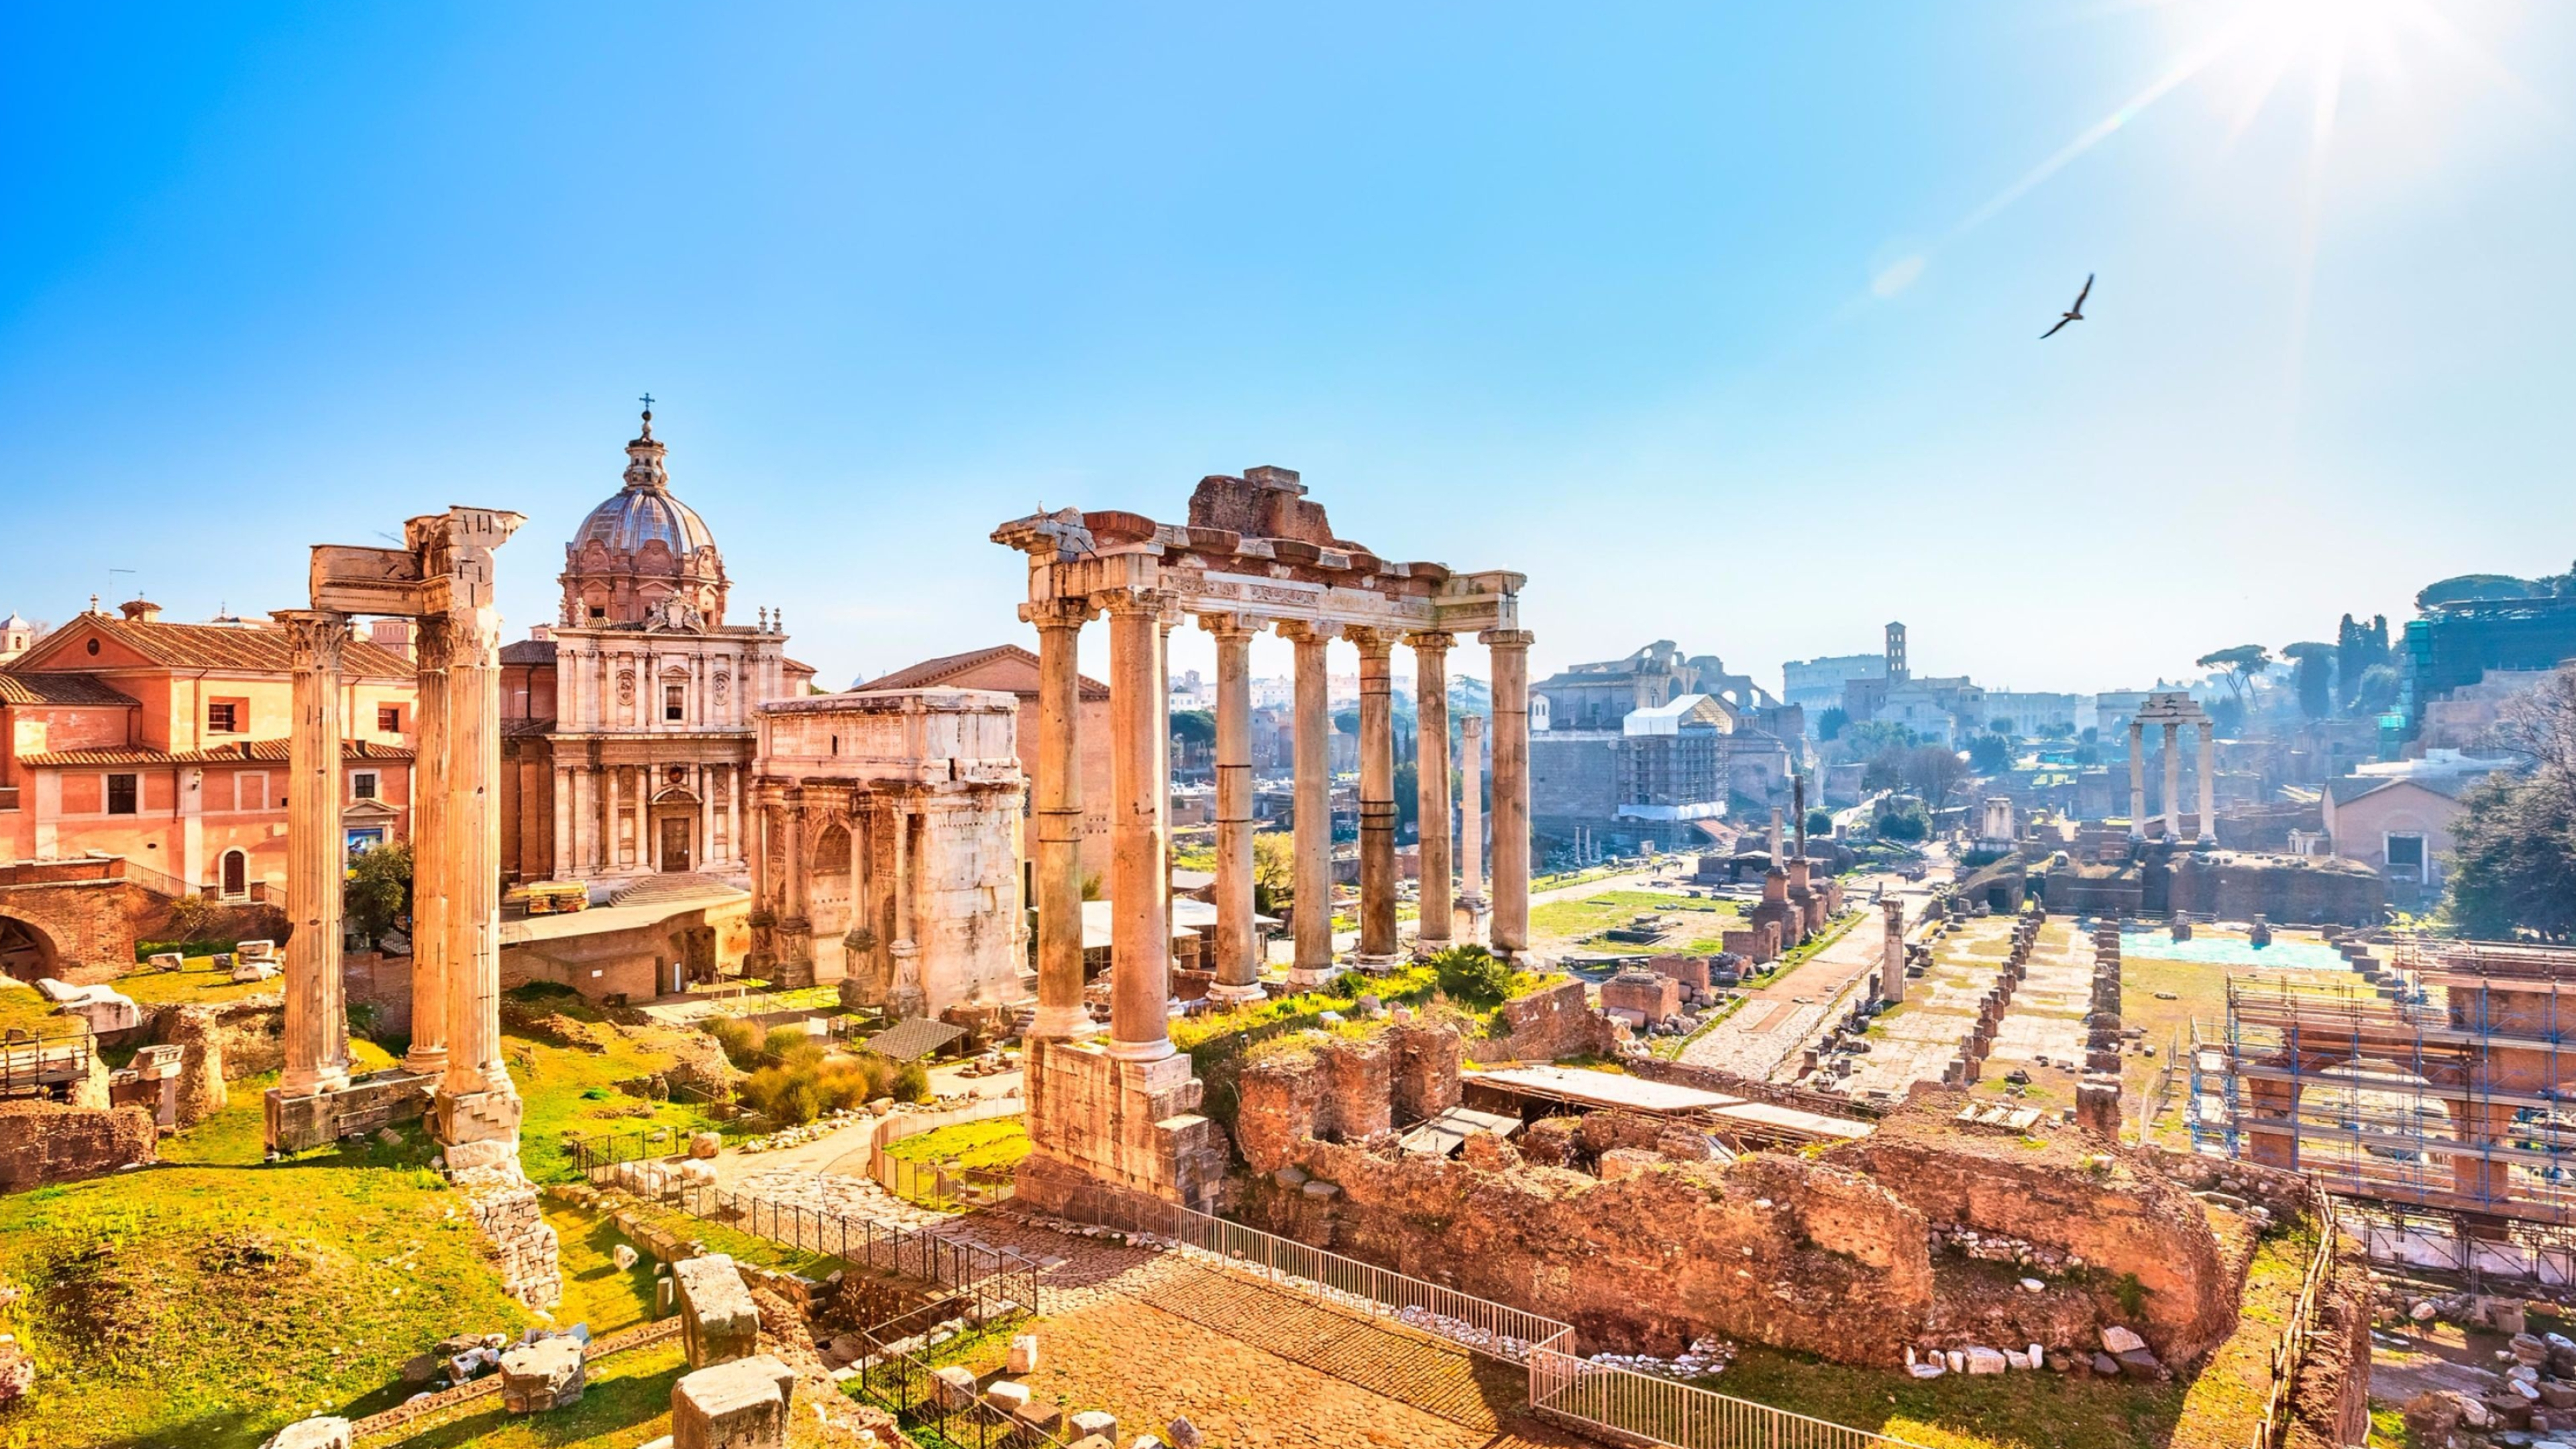 Rome: The Roman Forum, The ancient city ruins. 3840x2160 4K Wallpaper.